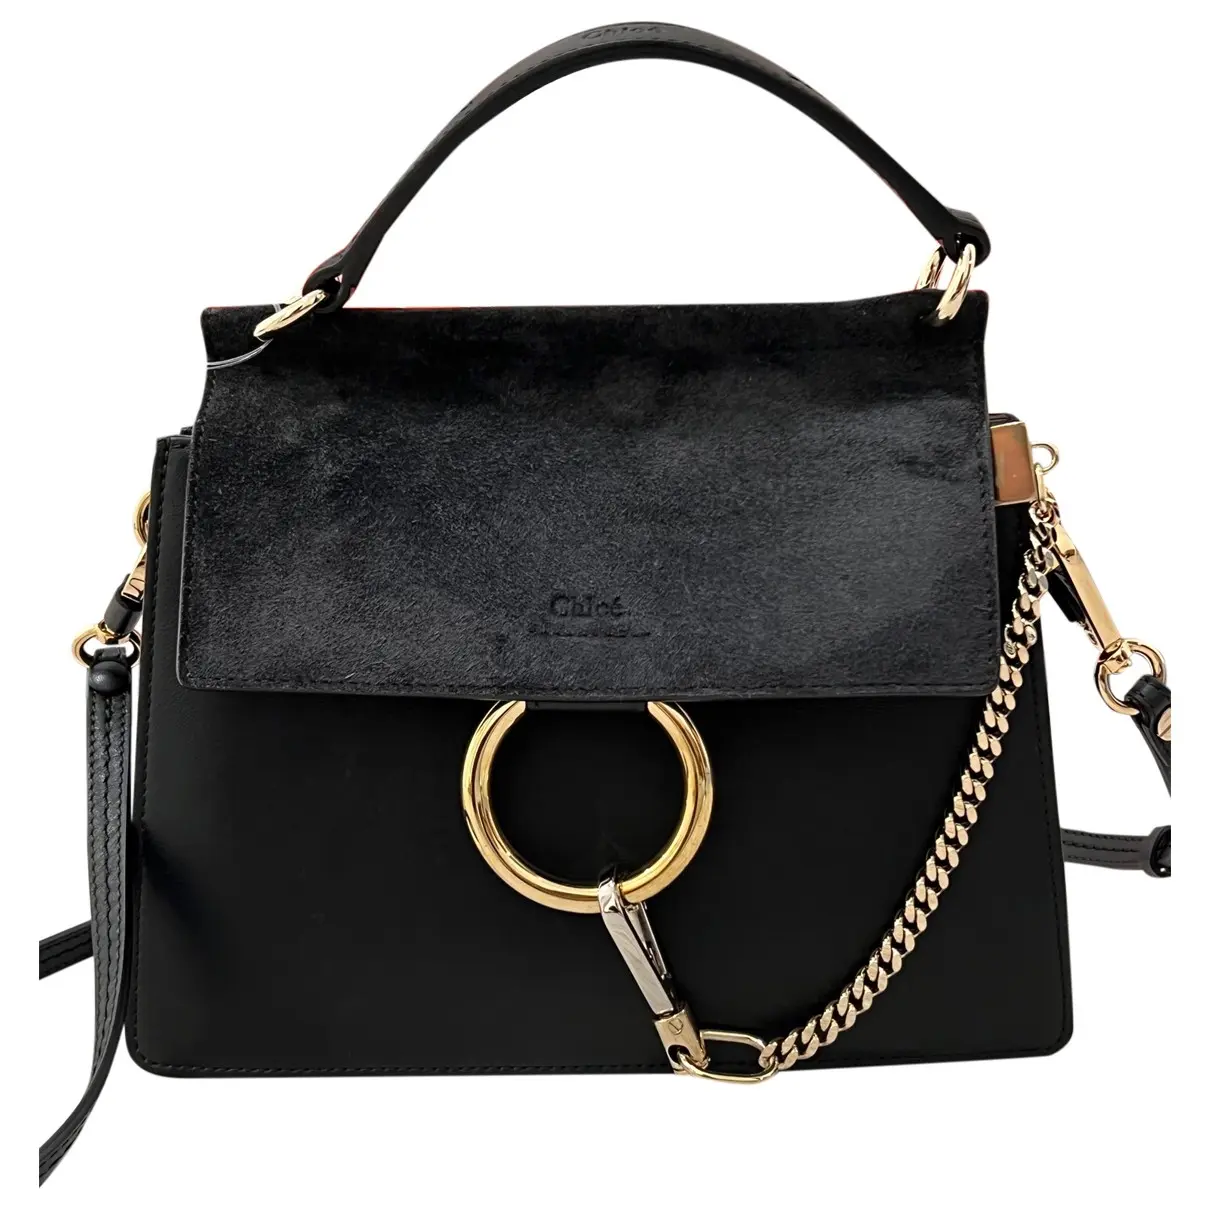 Faye day leather handbag